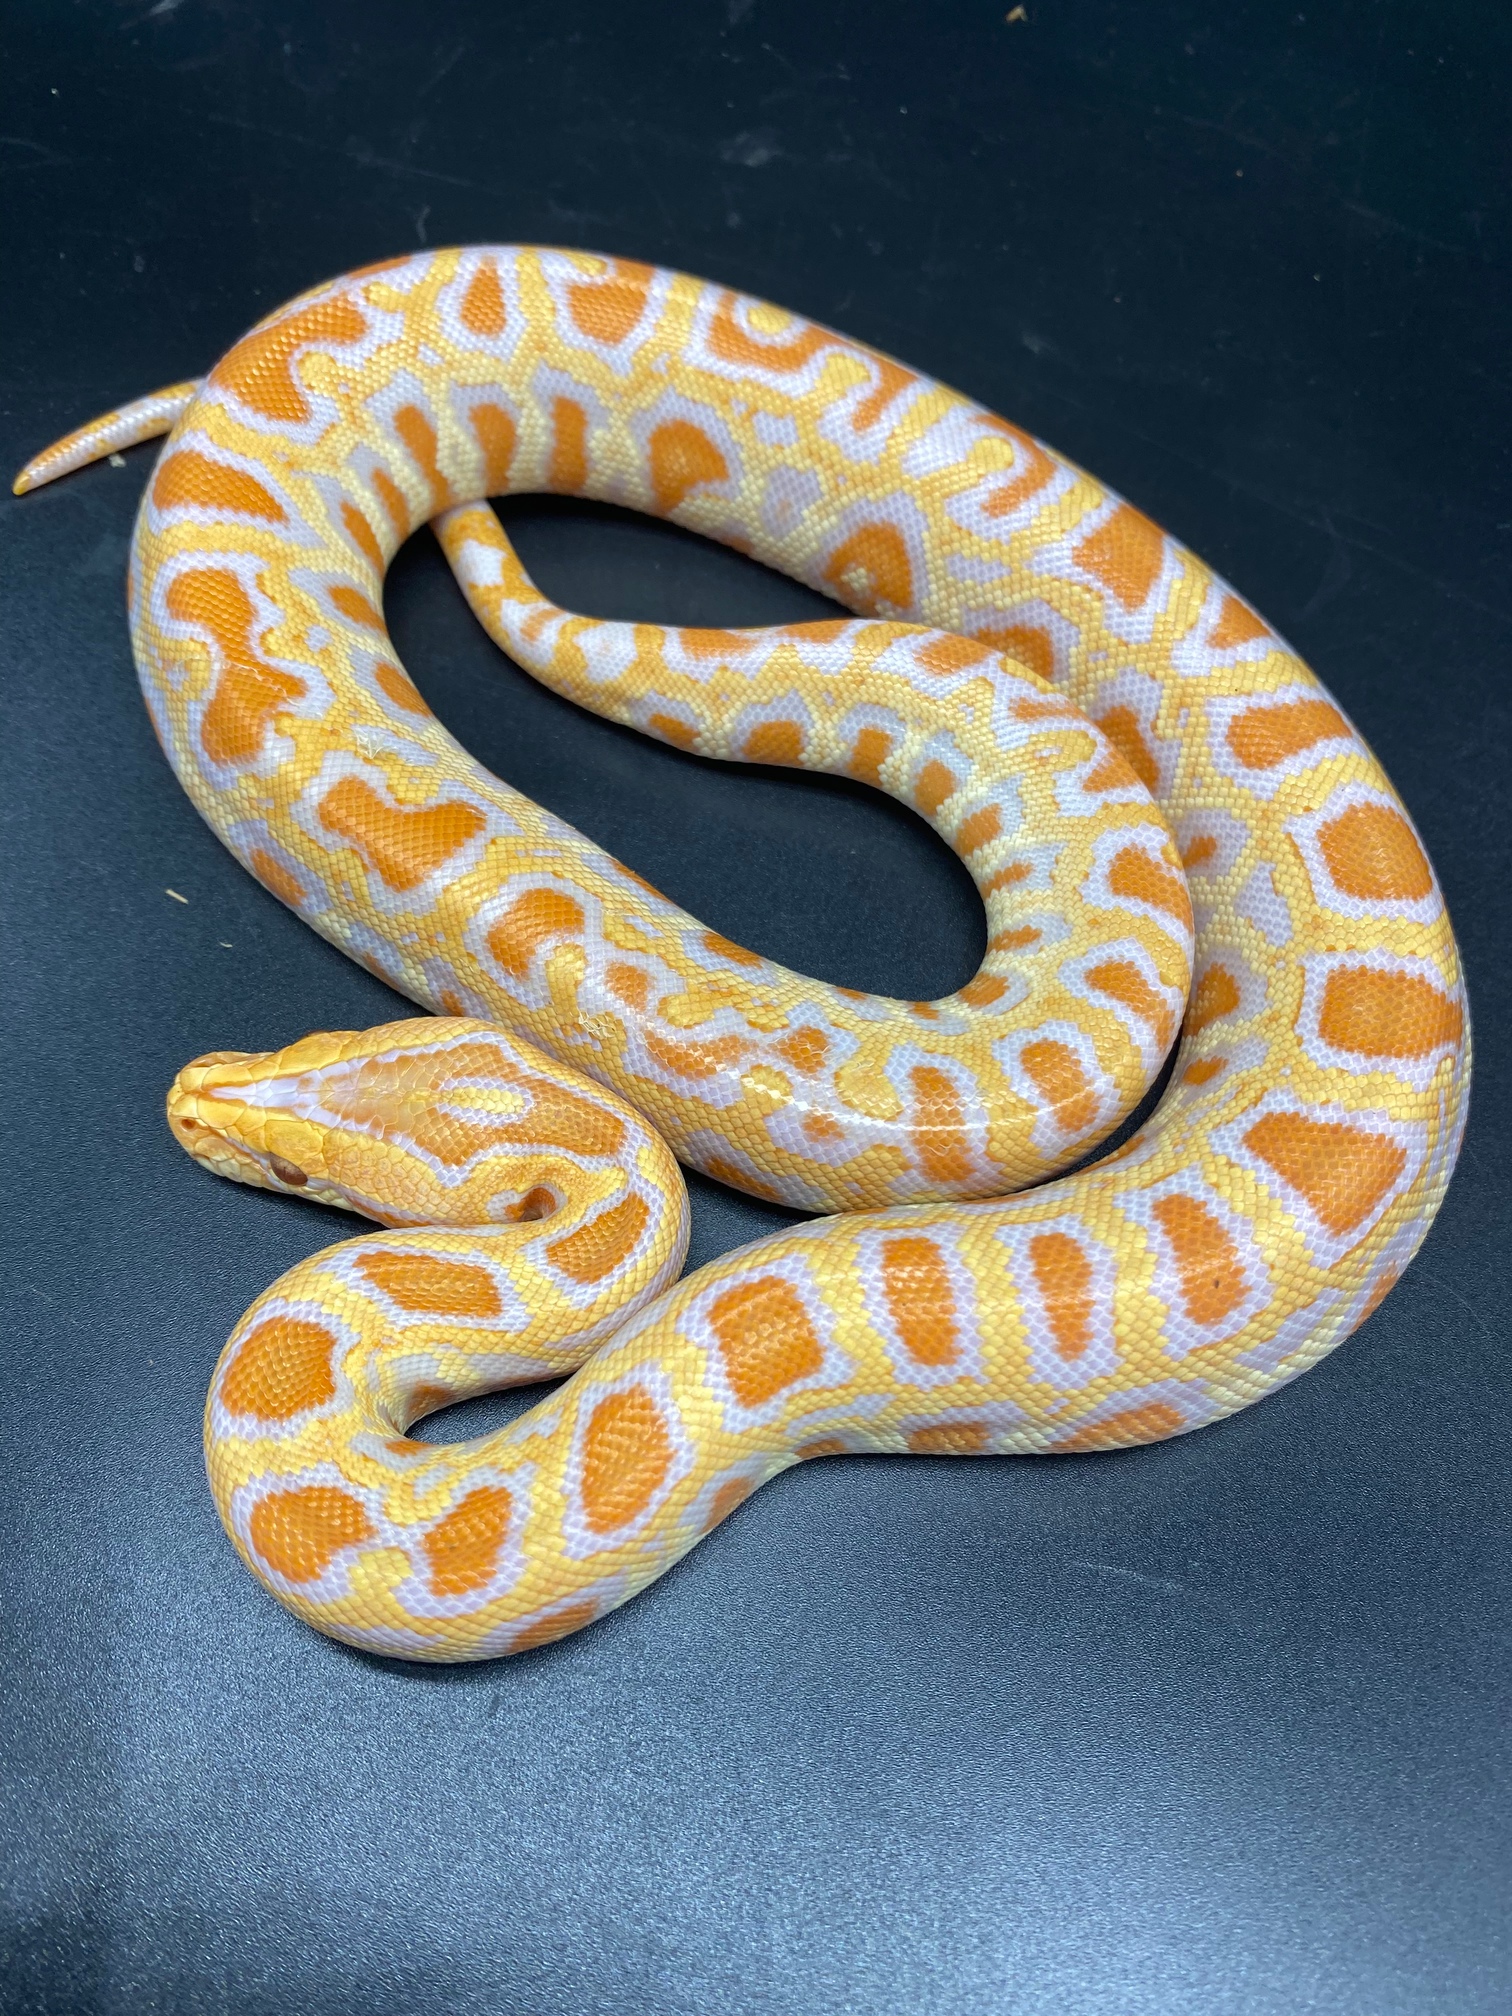 Albino Burmese Python by Major league exotic pets